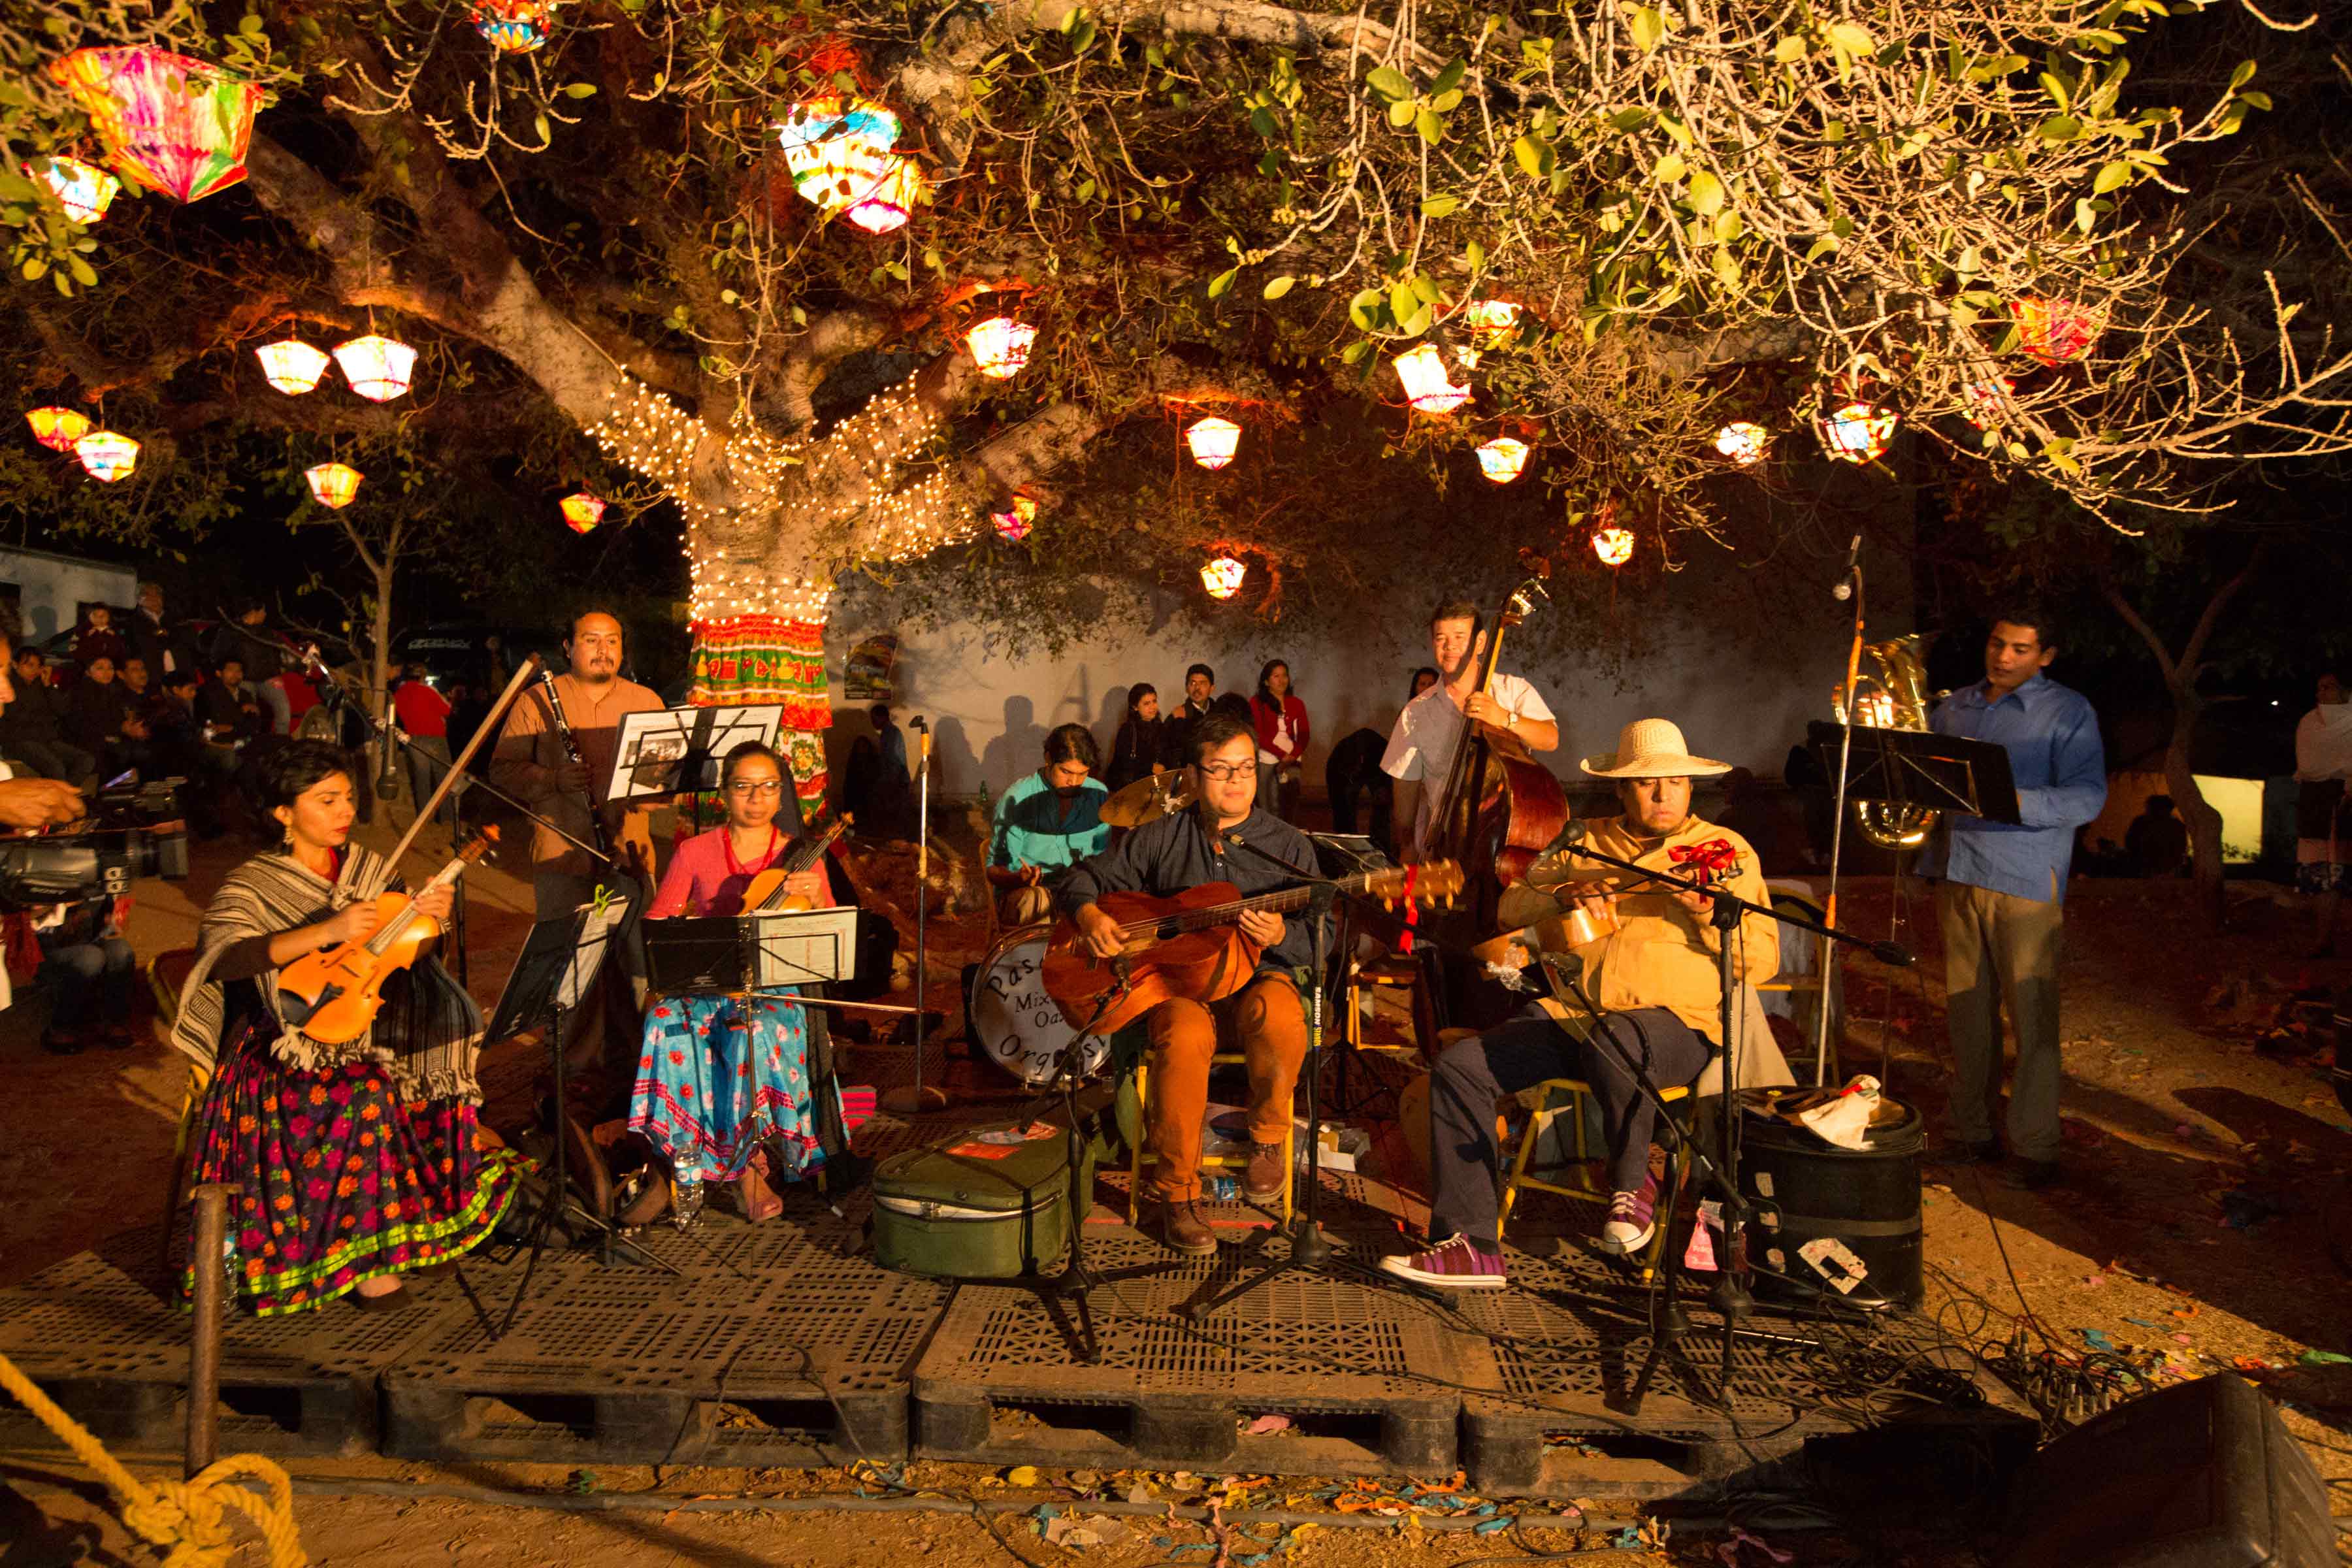 Pasatono, Mexican music ensemble